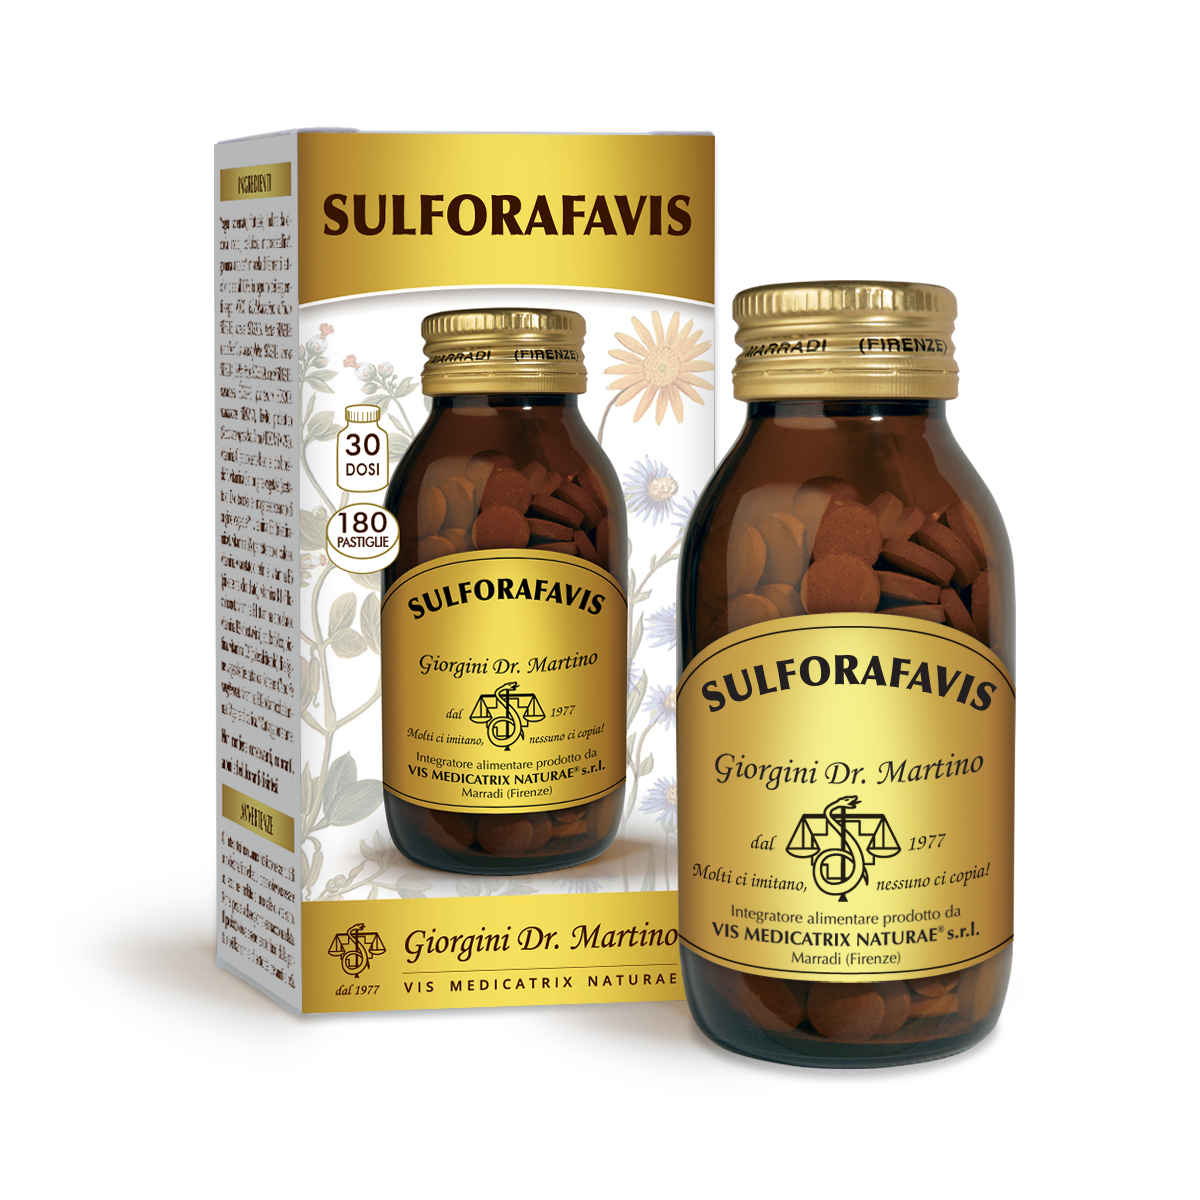  SULFORAFAVIS 90 g - 180 pastilles de 500 mg 